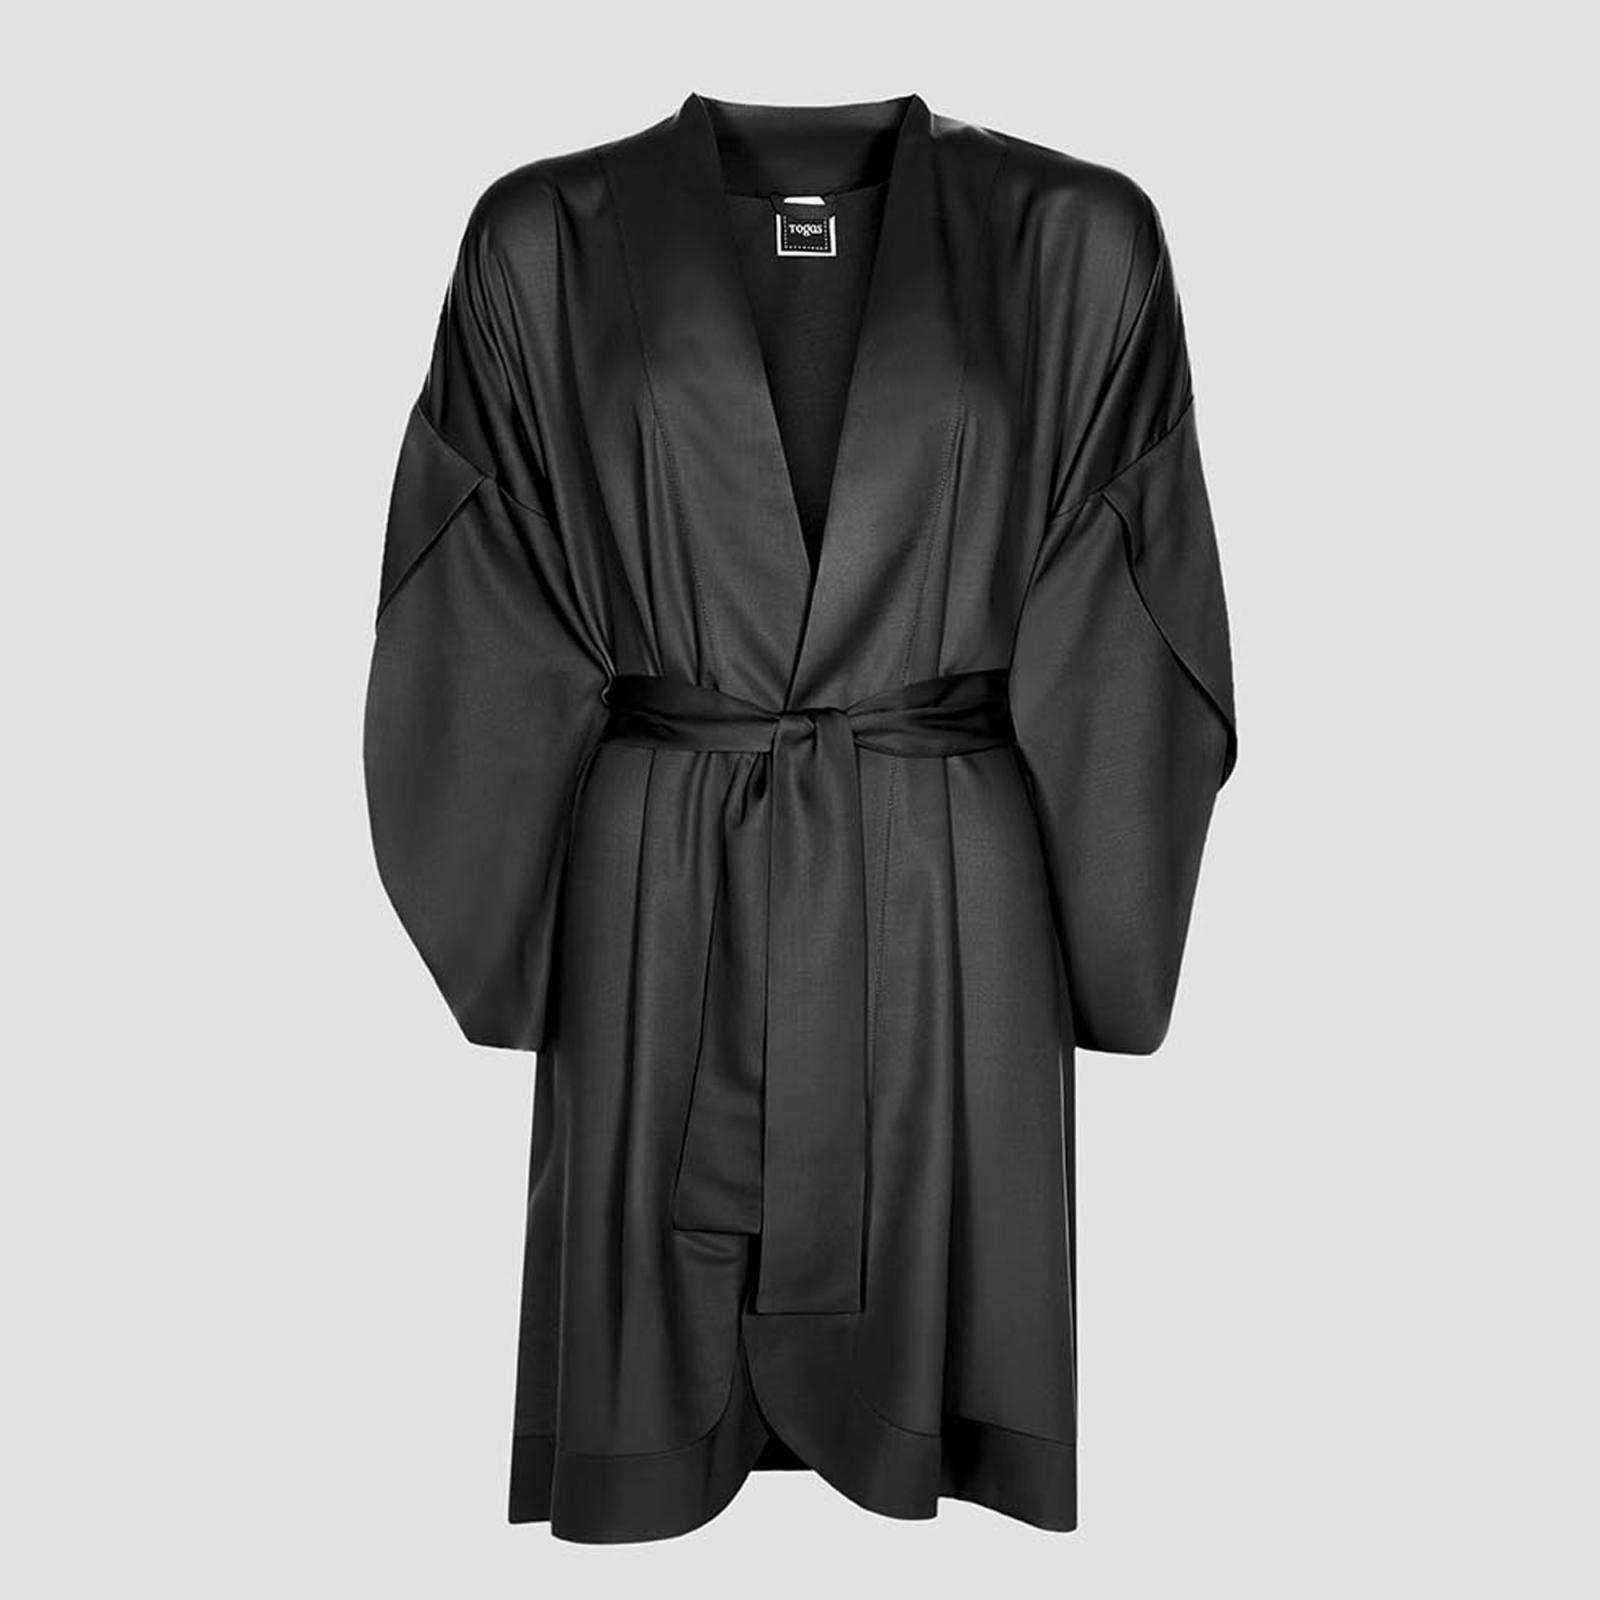 Халат-кимоно короткое Togas Наоми чёрное XS (42) халат кимоно короткое togas наоми чёрное l 48